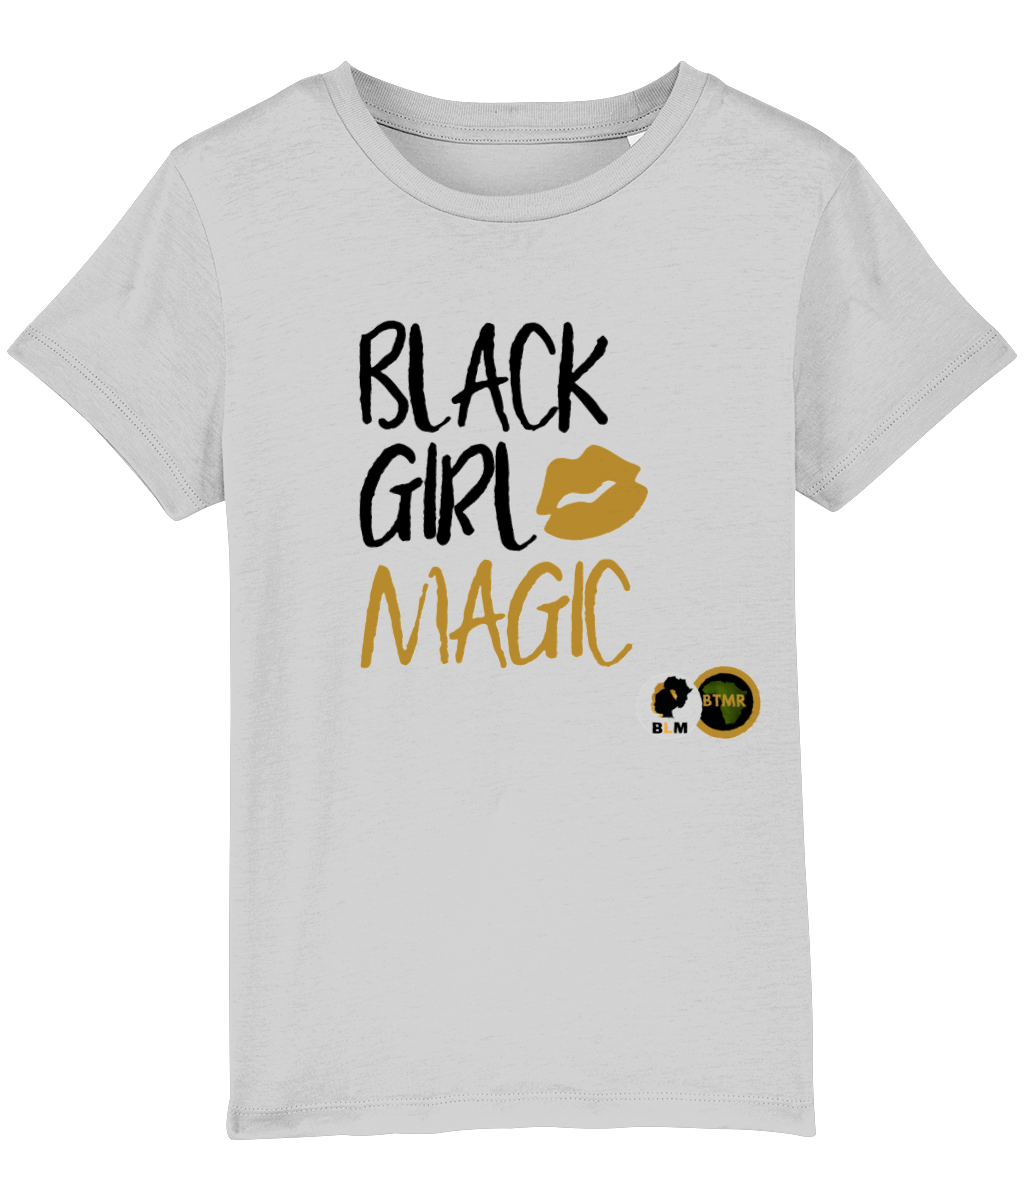 BTMR BlackLikeMe Black Girl Magic T Shirt